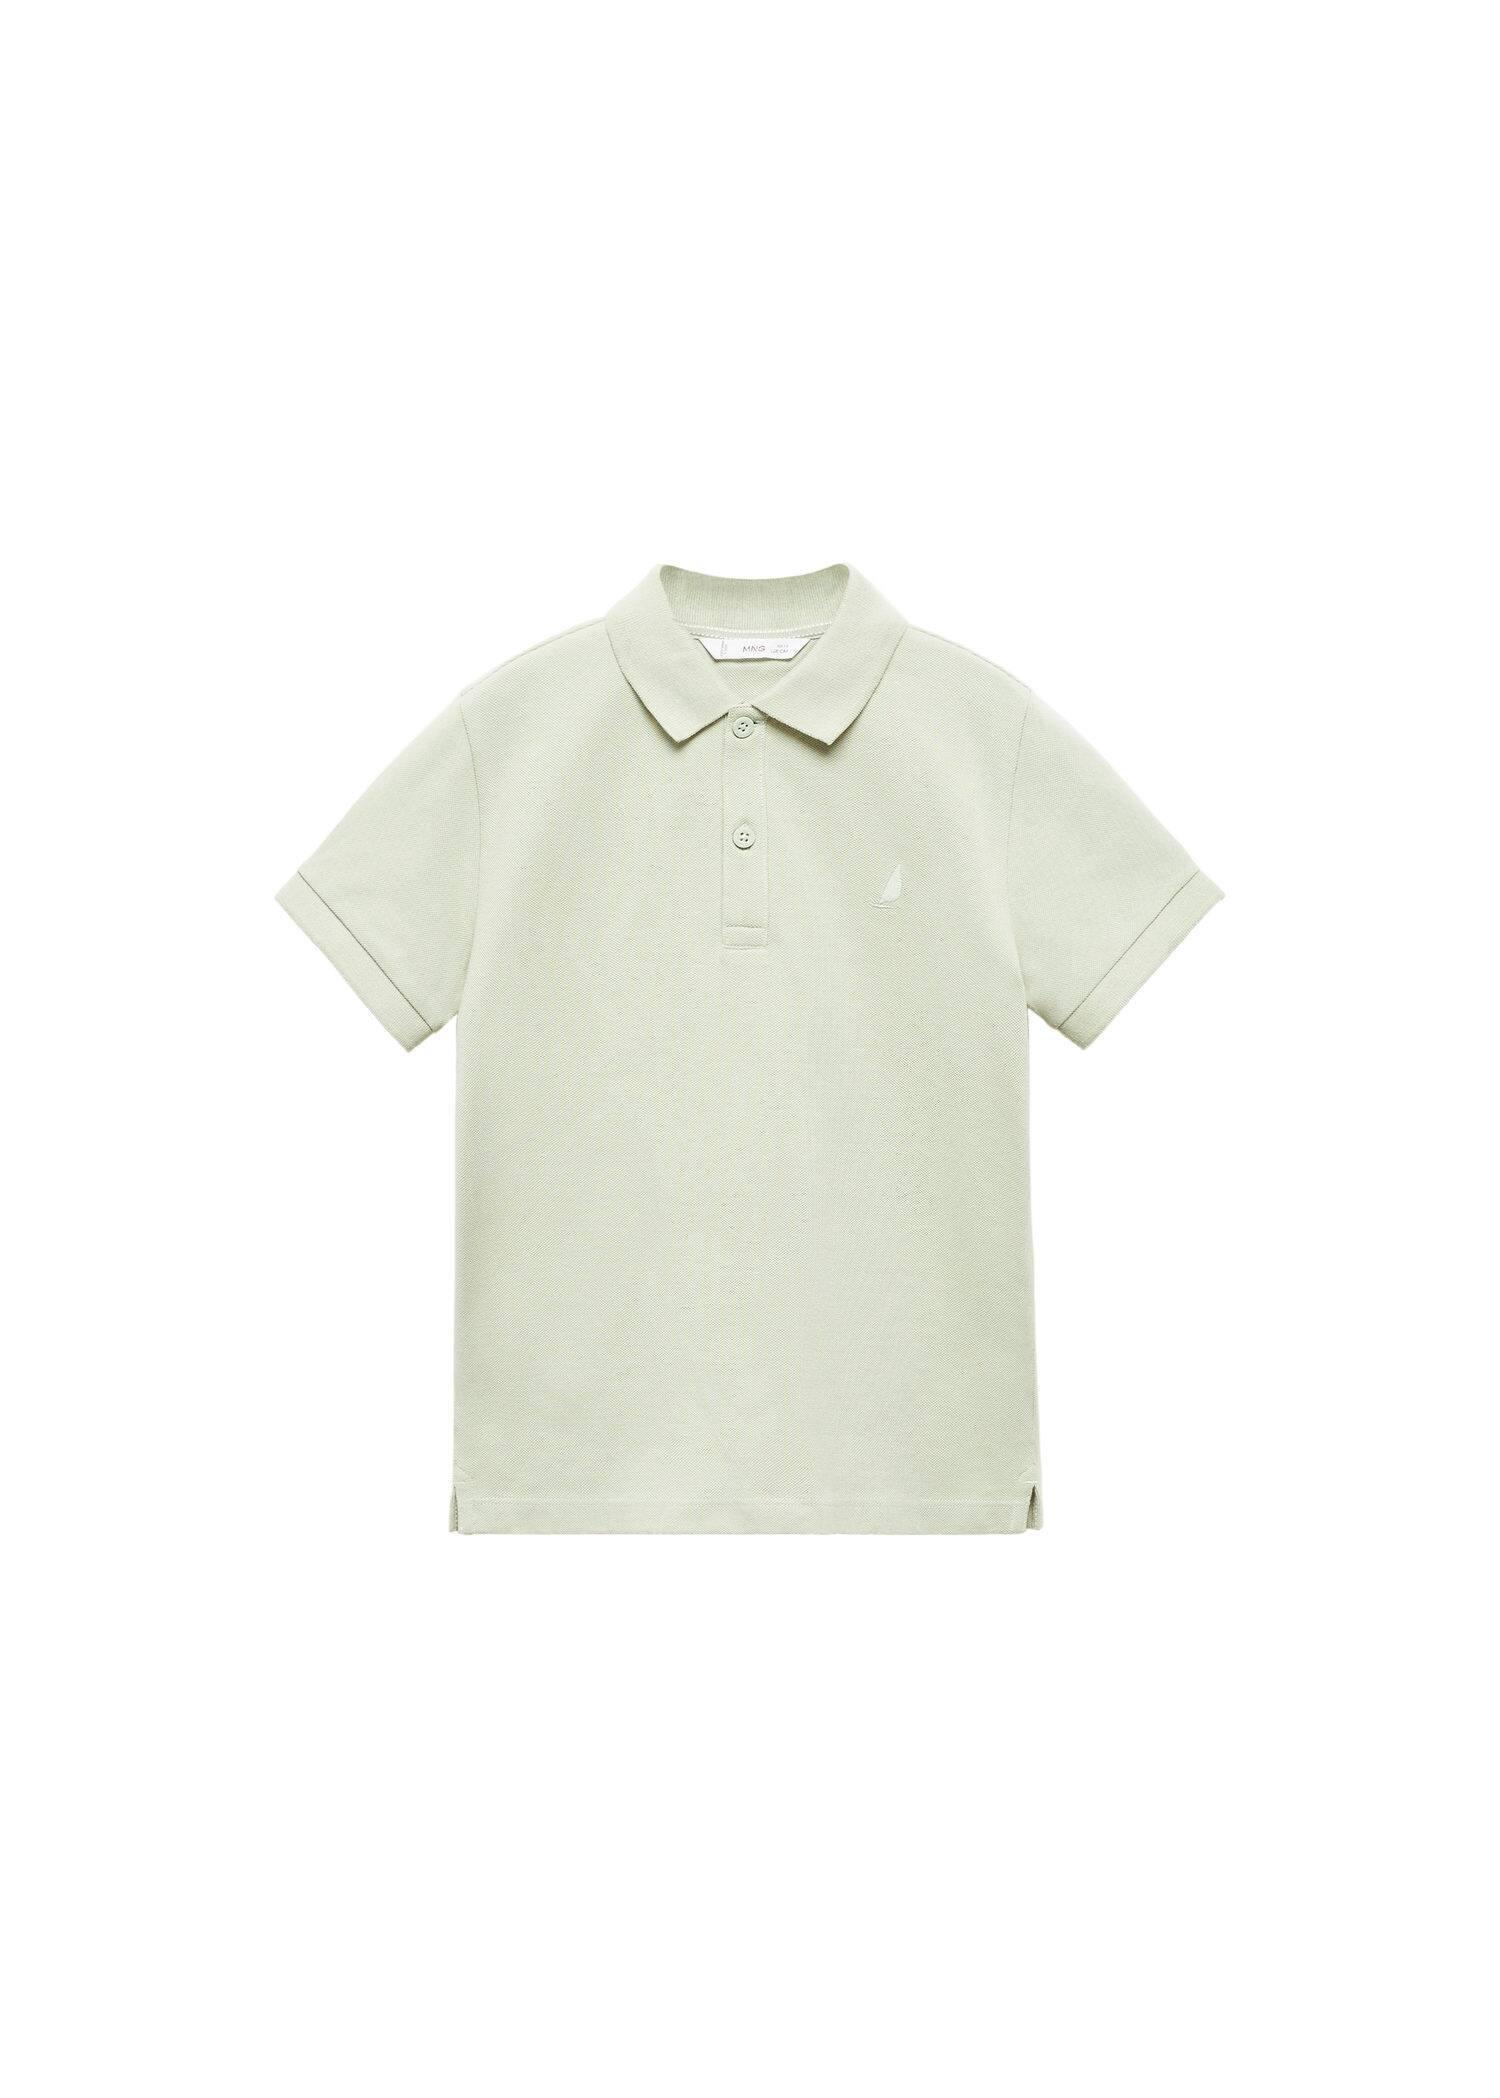 Mango - Khaki Cotton Polo Shirt, Kids Boys